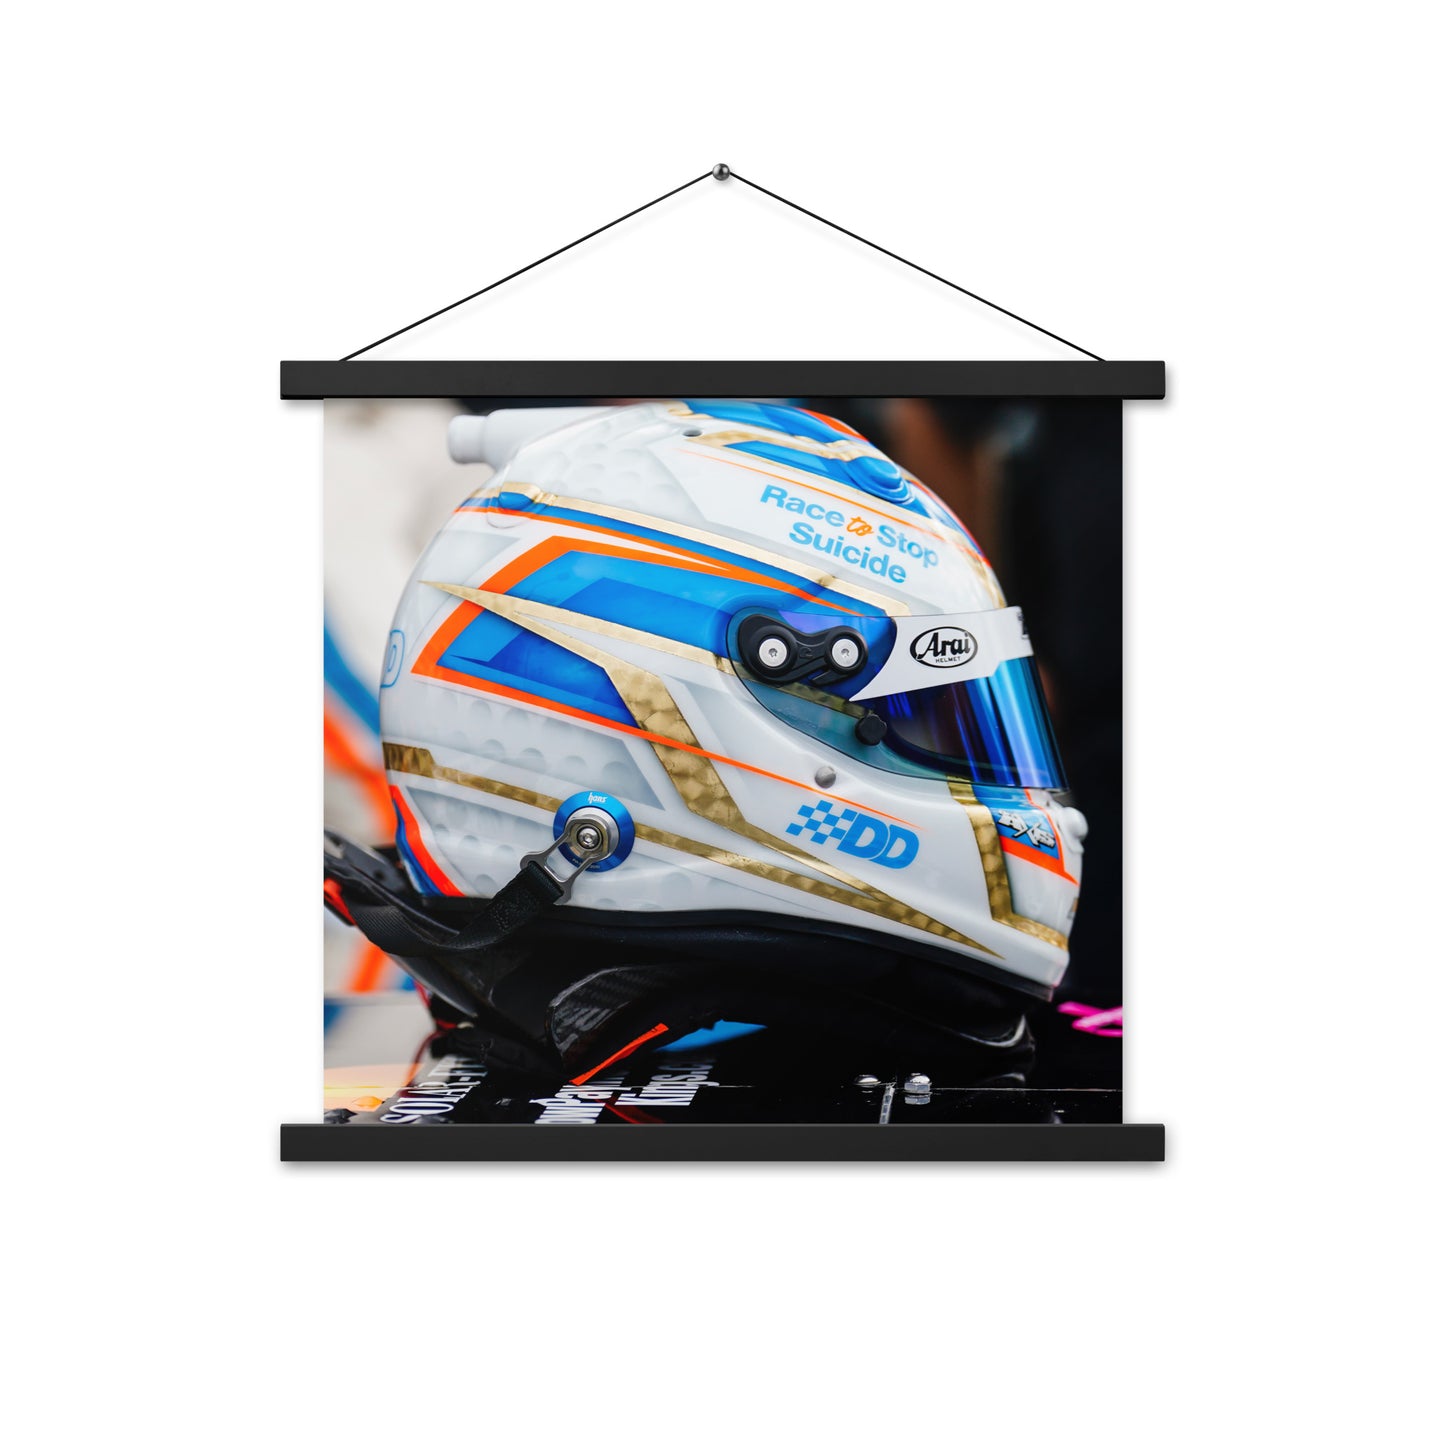 Poster with hangers - [Daniel Dye Racing Shop]